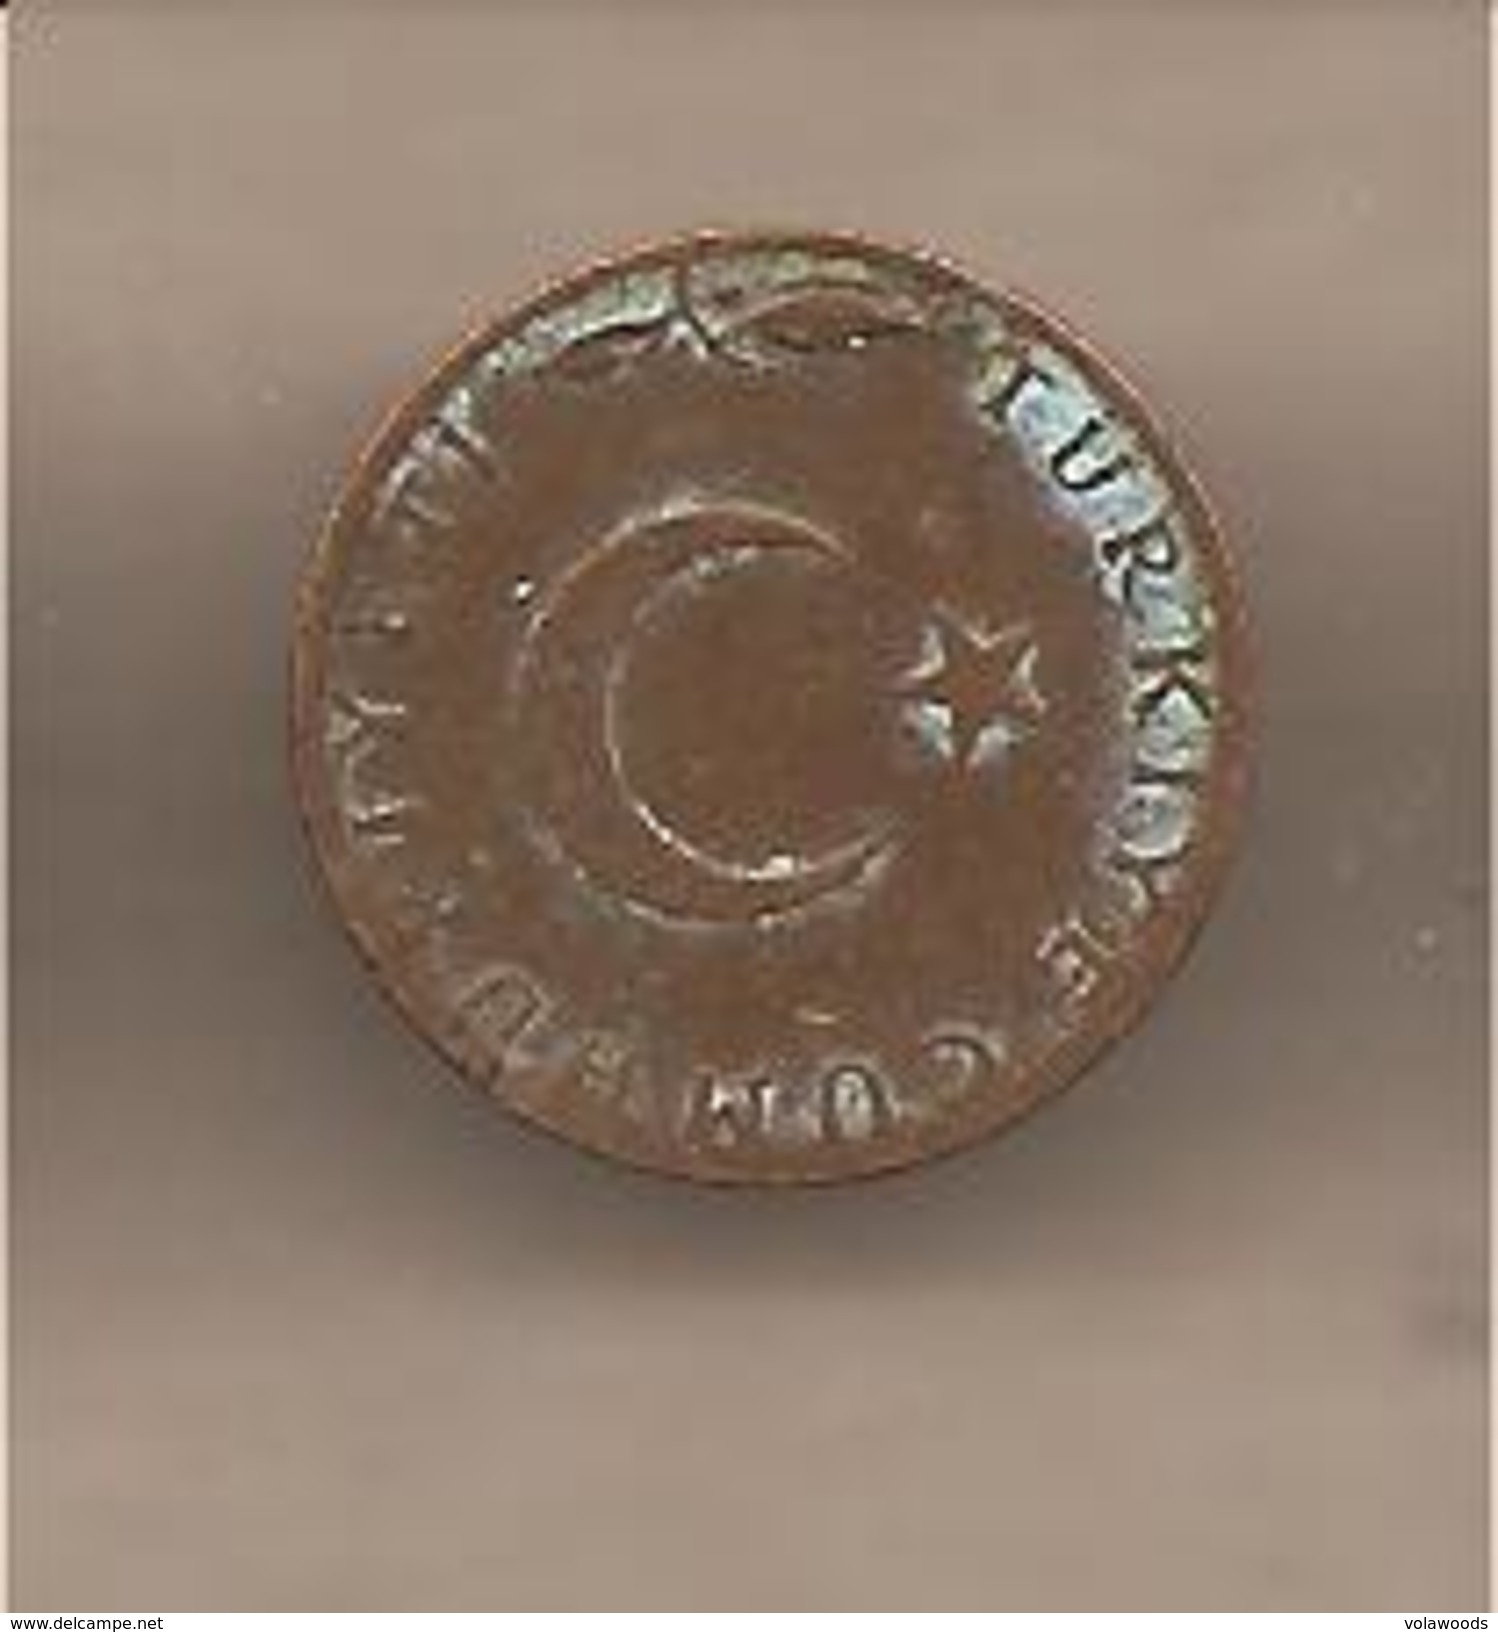 Turchia - Moneta Circolata Da 5 Kurus - 1959 - Turchia